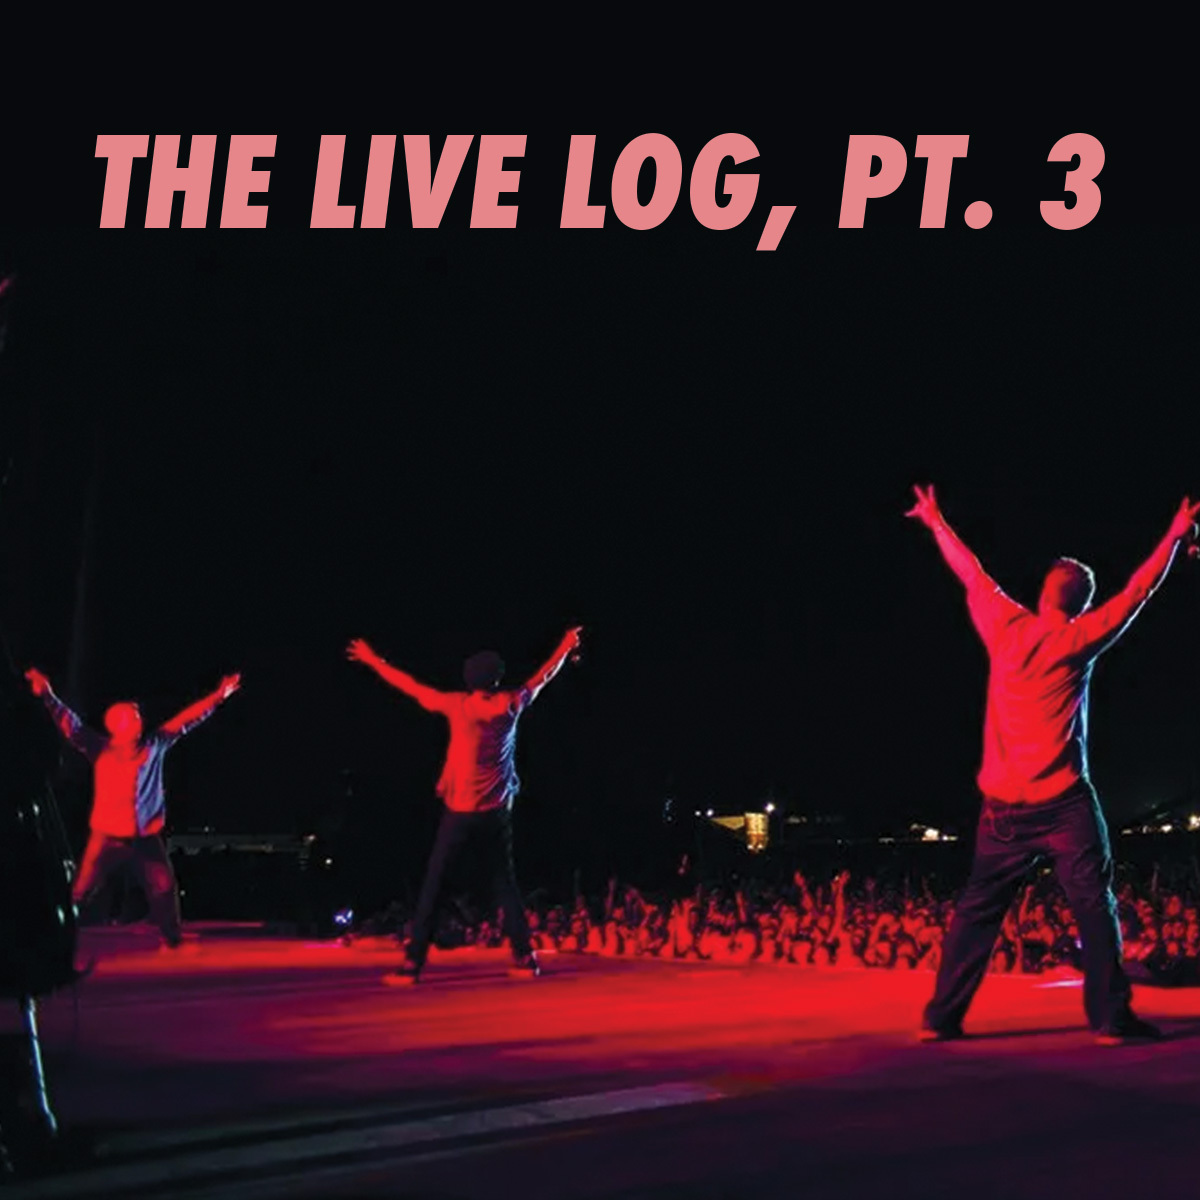 The Live Log, Pt. 3